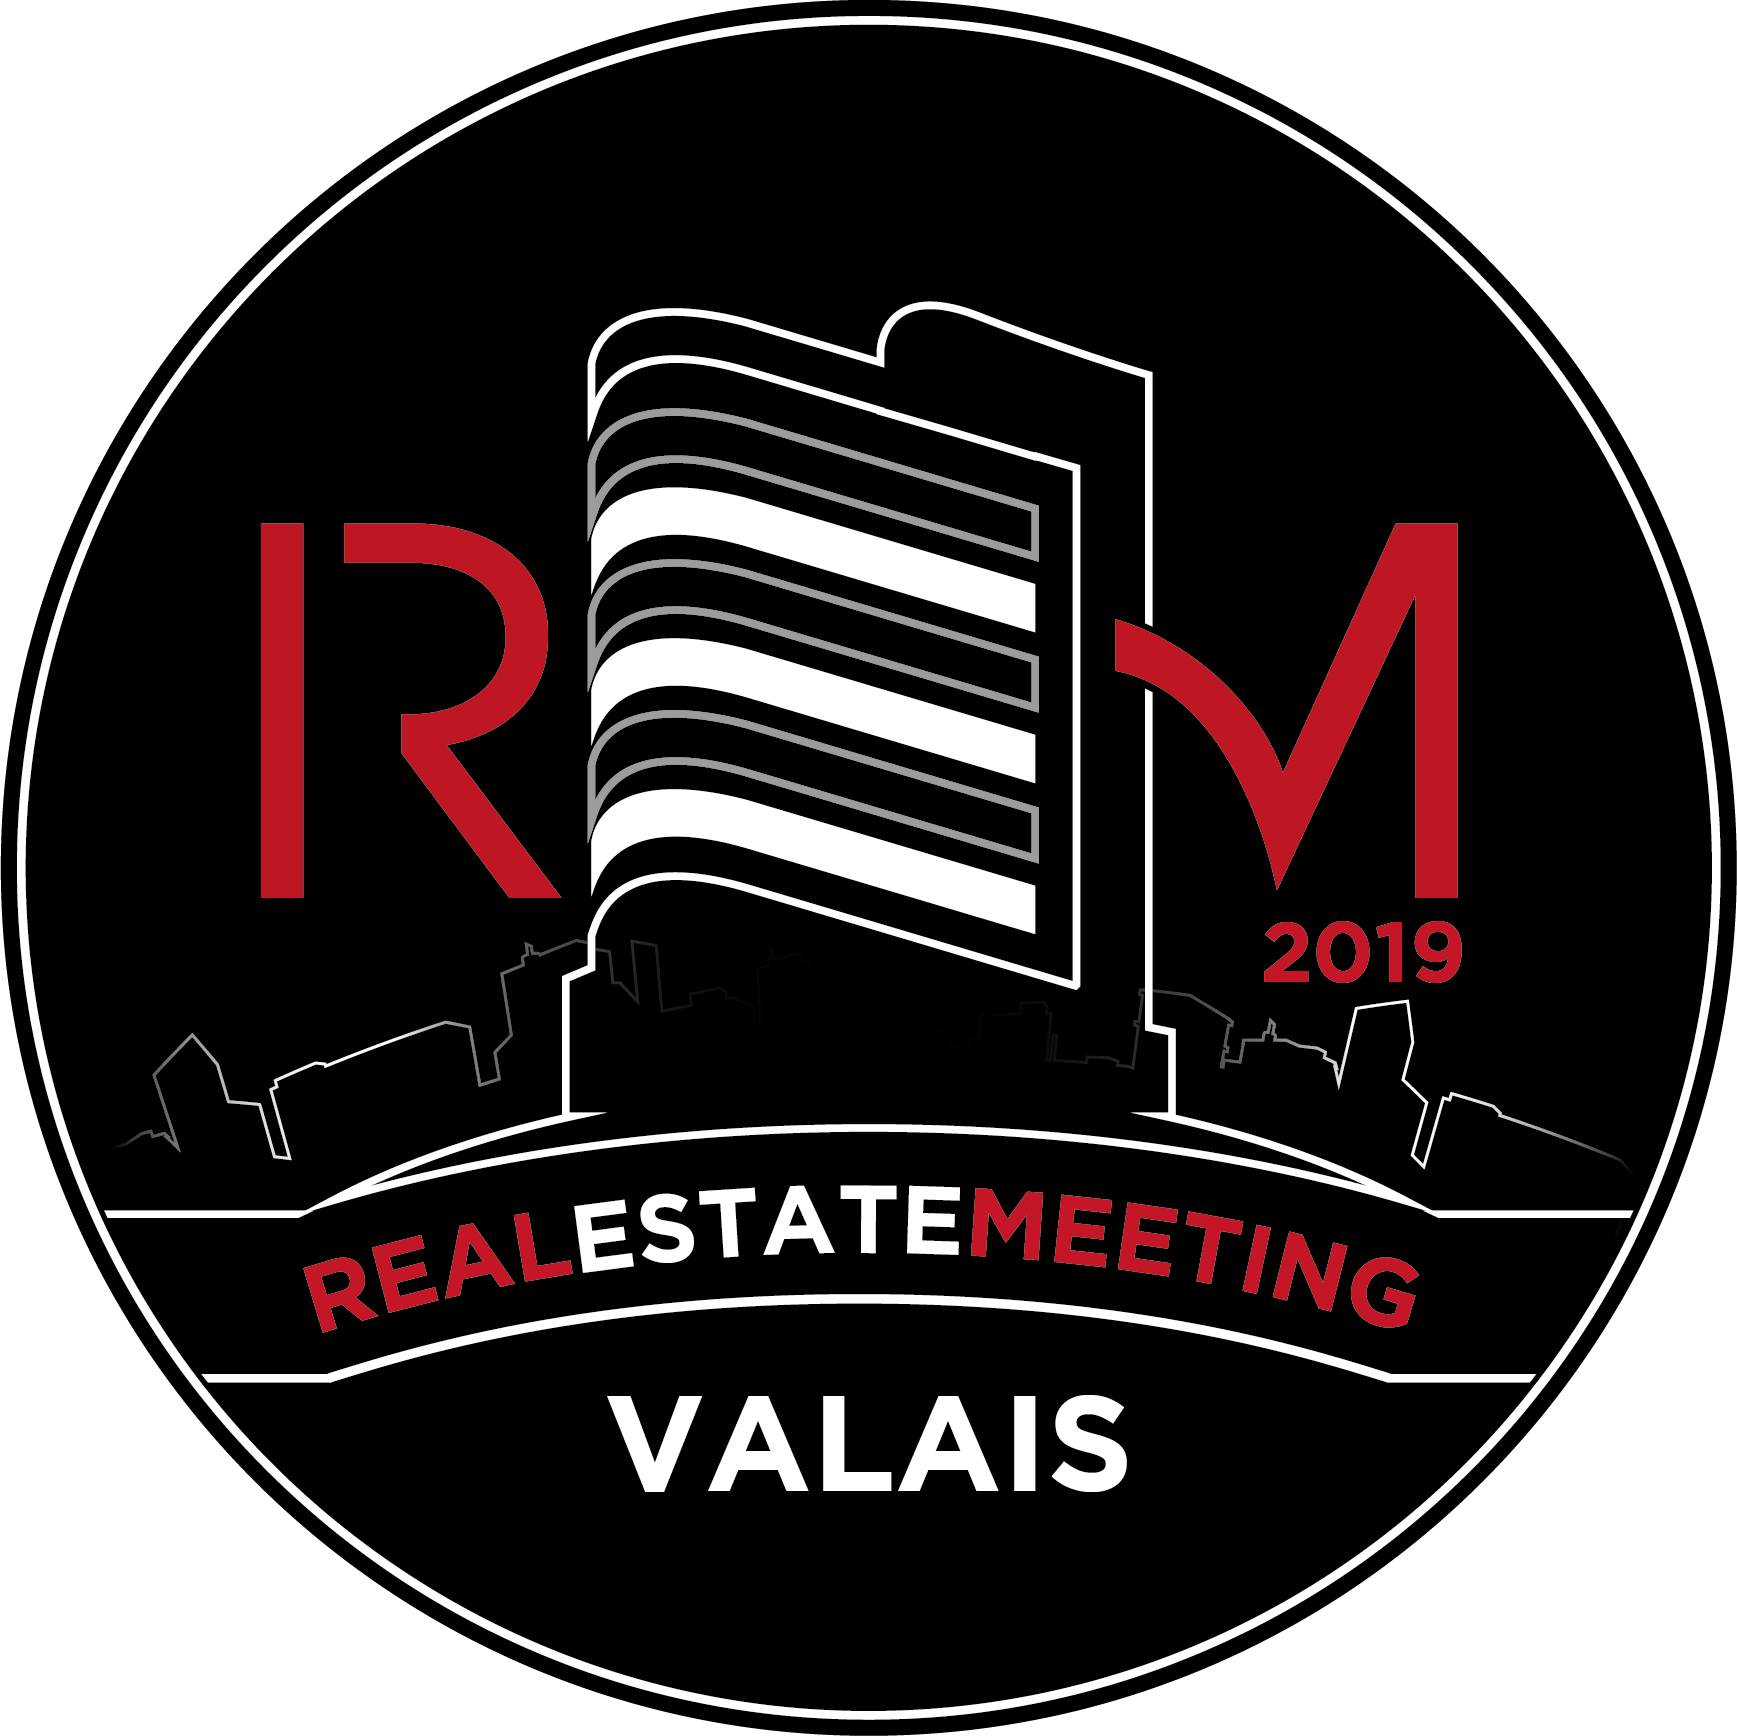 Real Estate Meeting 2019 - Valais